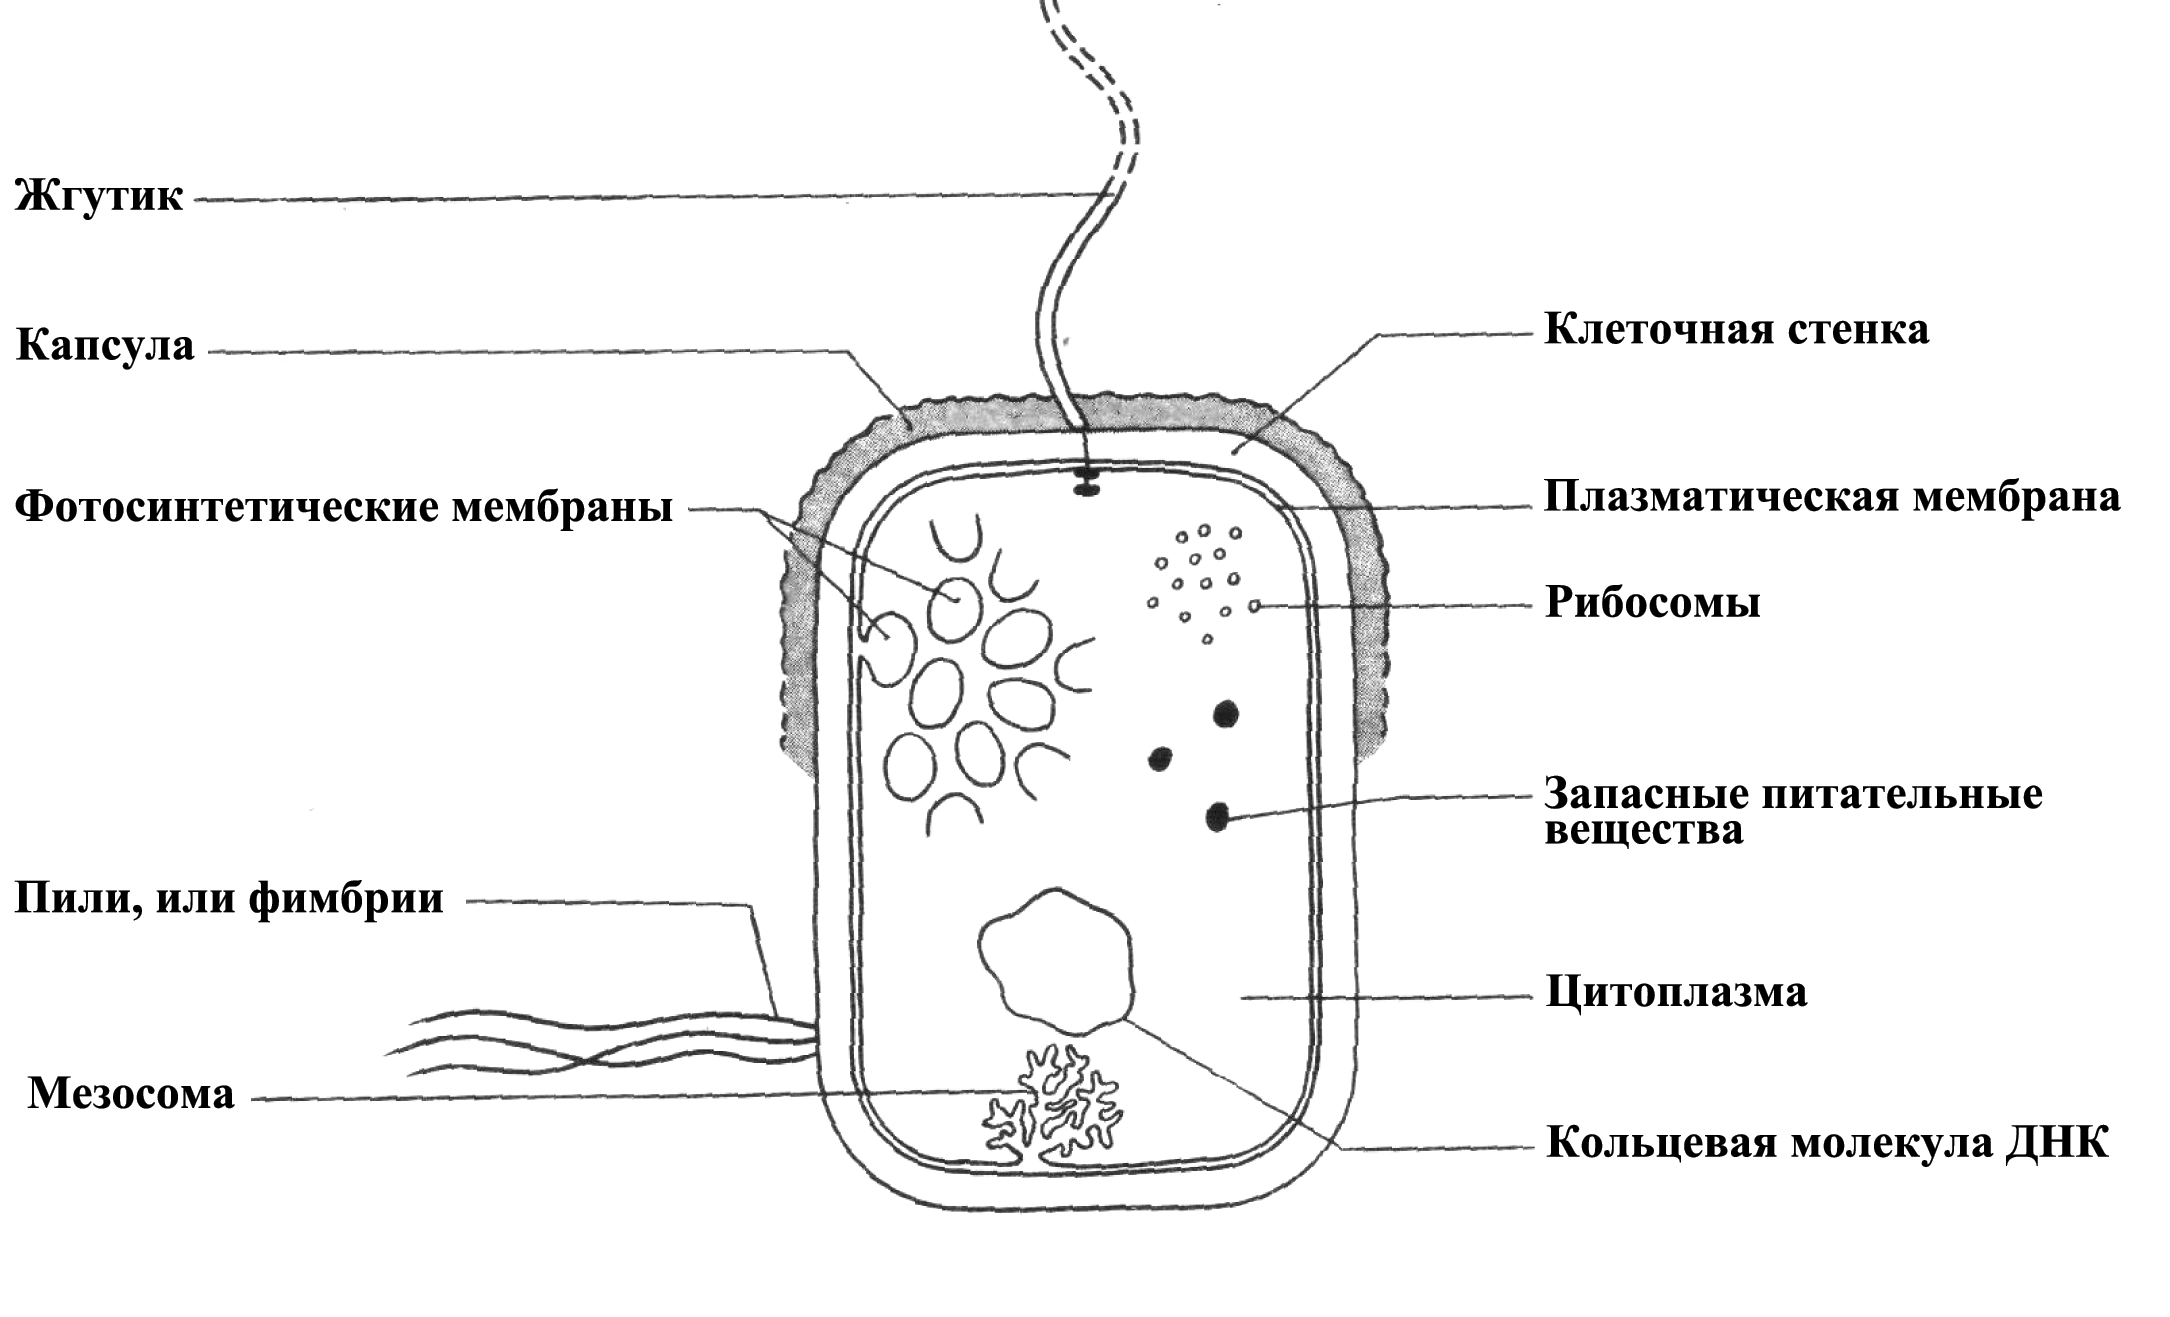 Структура клетки прокариот. Строение прокариотической клетки бактерии. Строение прокариотической клетки ЕГЭ. Схема строения клетки прокариот. Строение клетки прокариот бактерии.